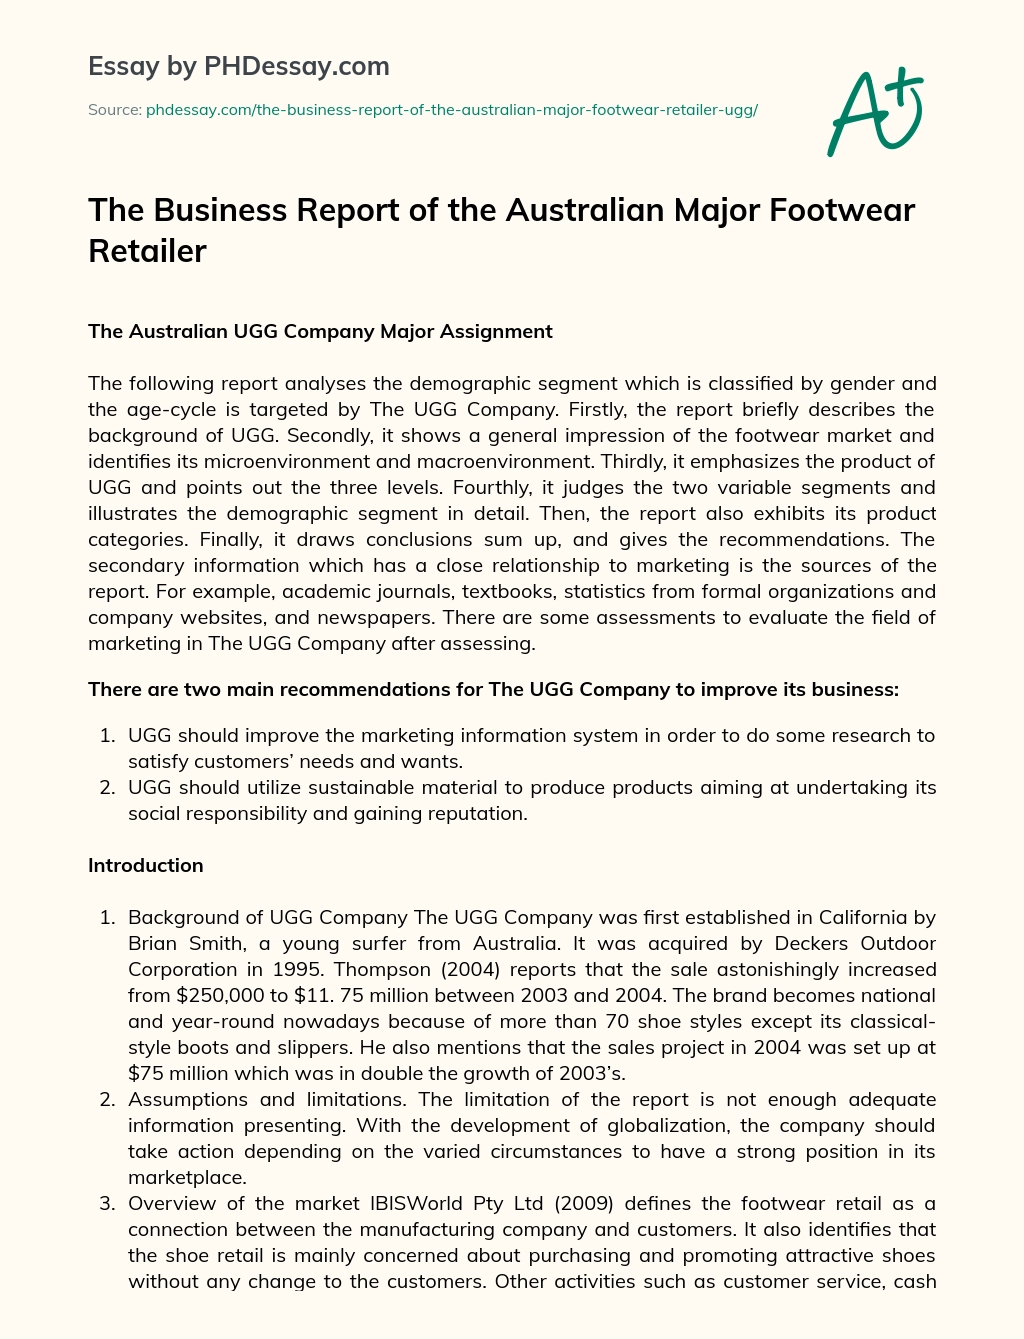 The Business Report of the Australian Major Footwear Retailer essay